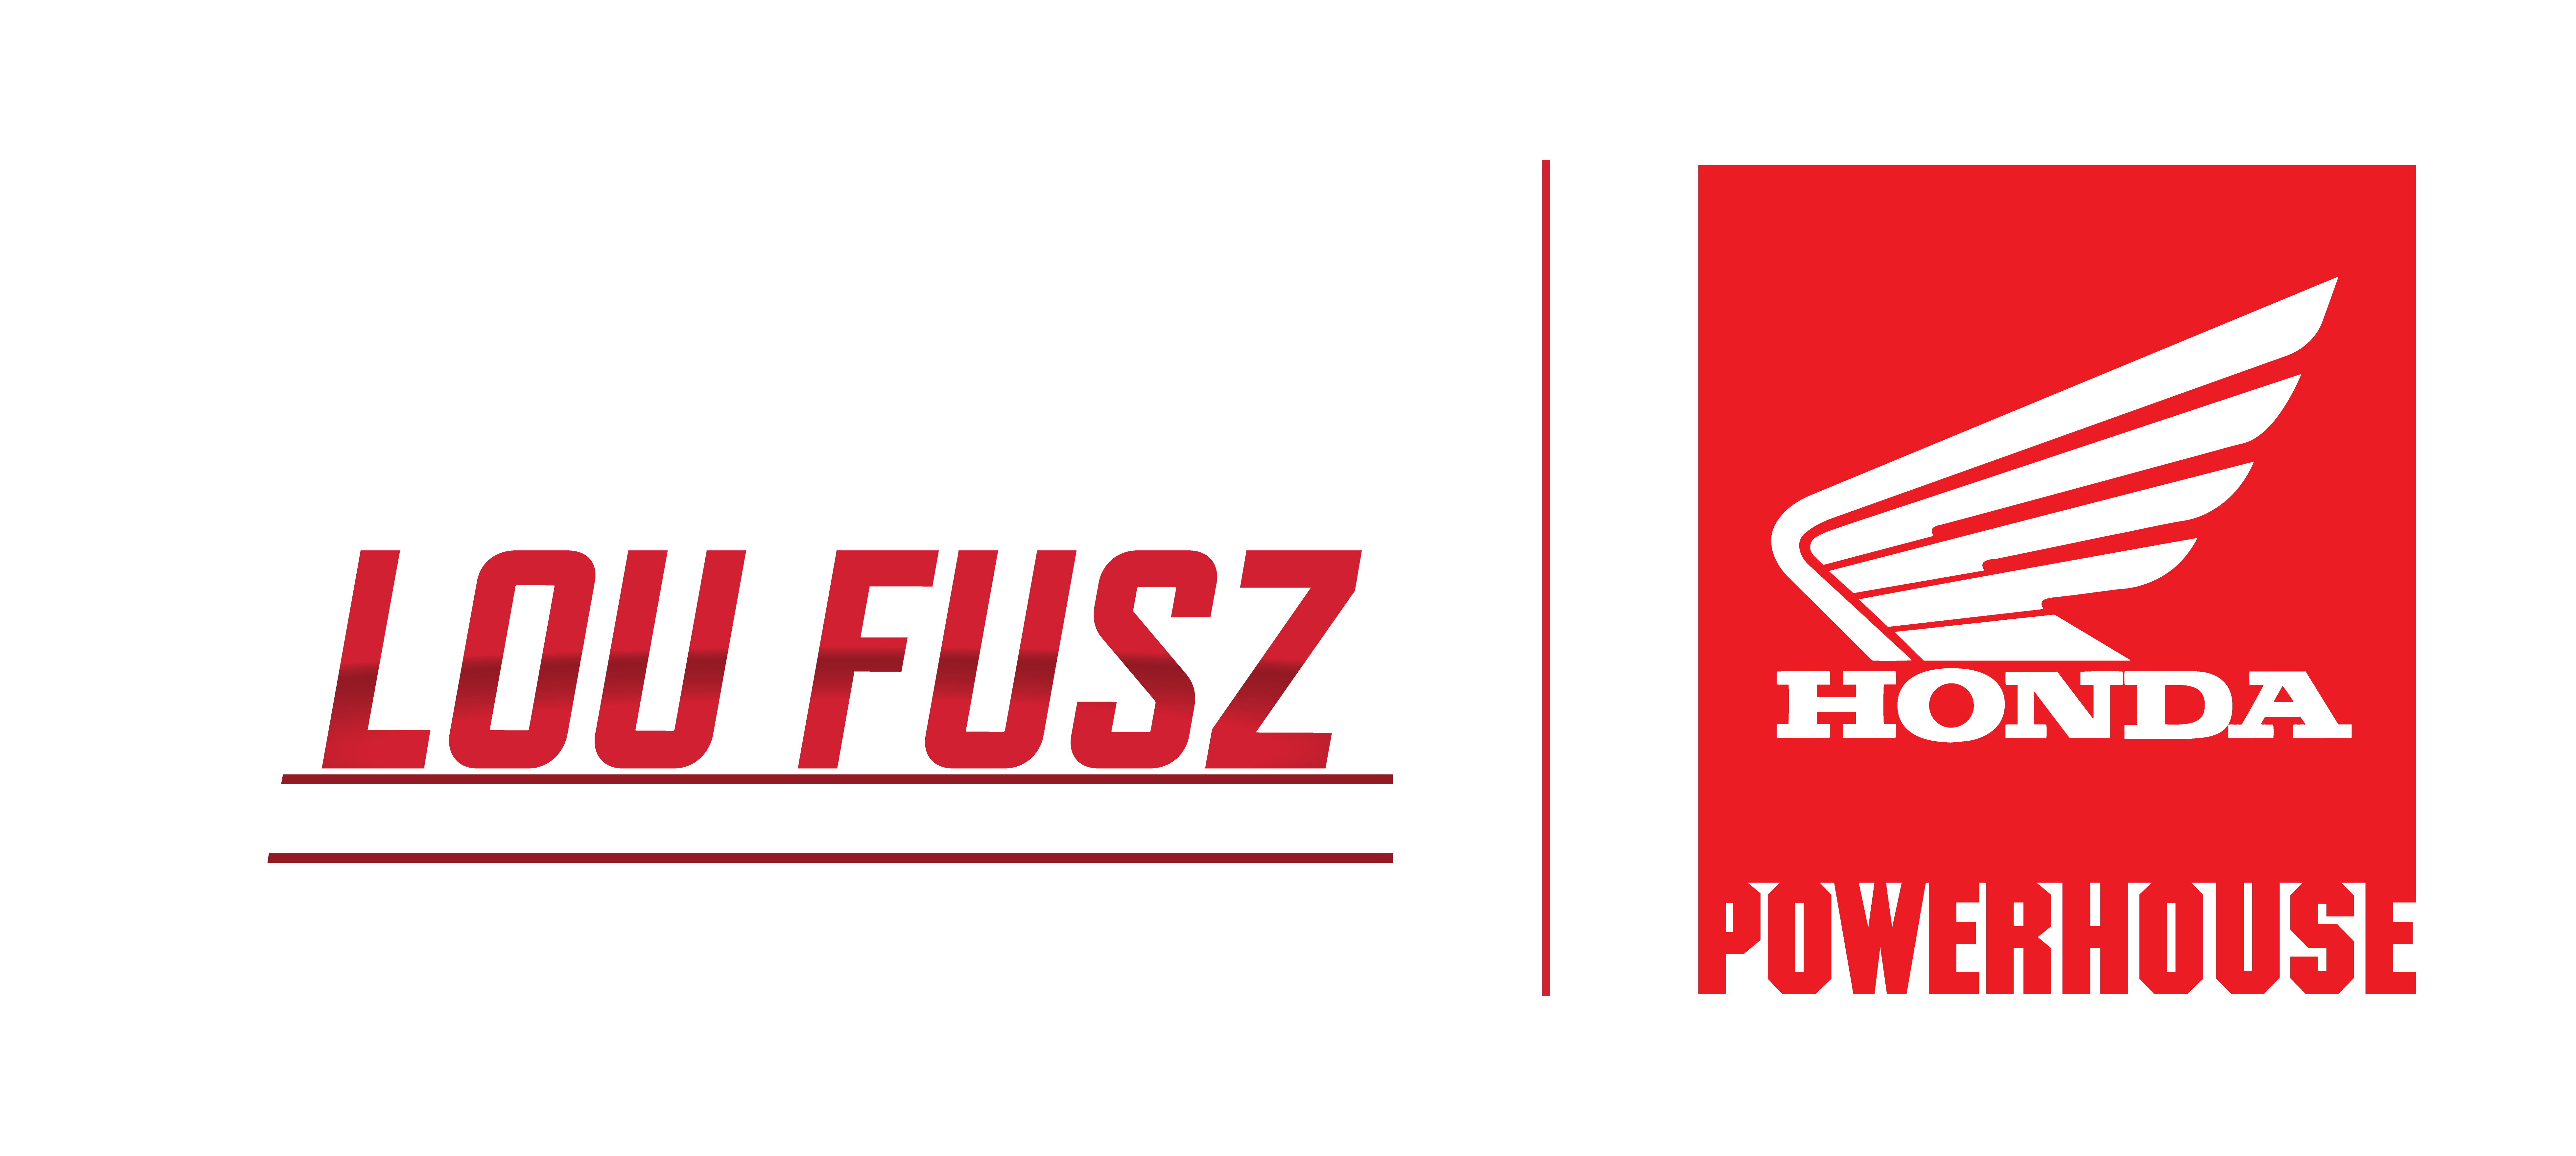 Lou Fusz Honda Powerhouse